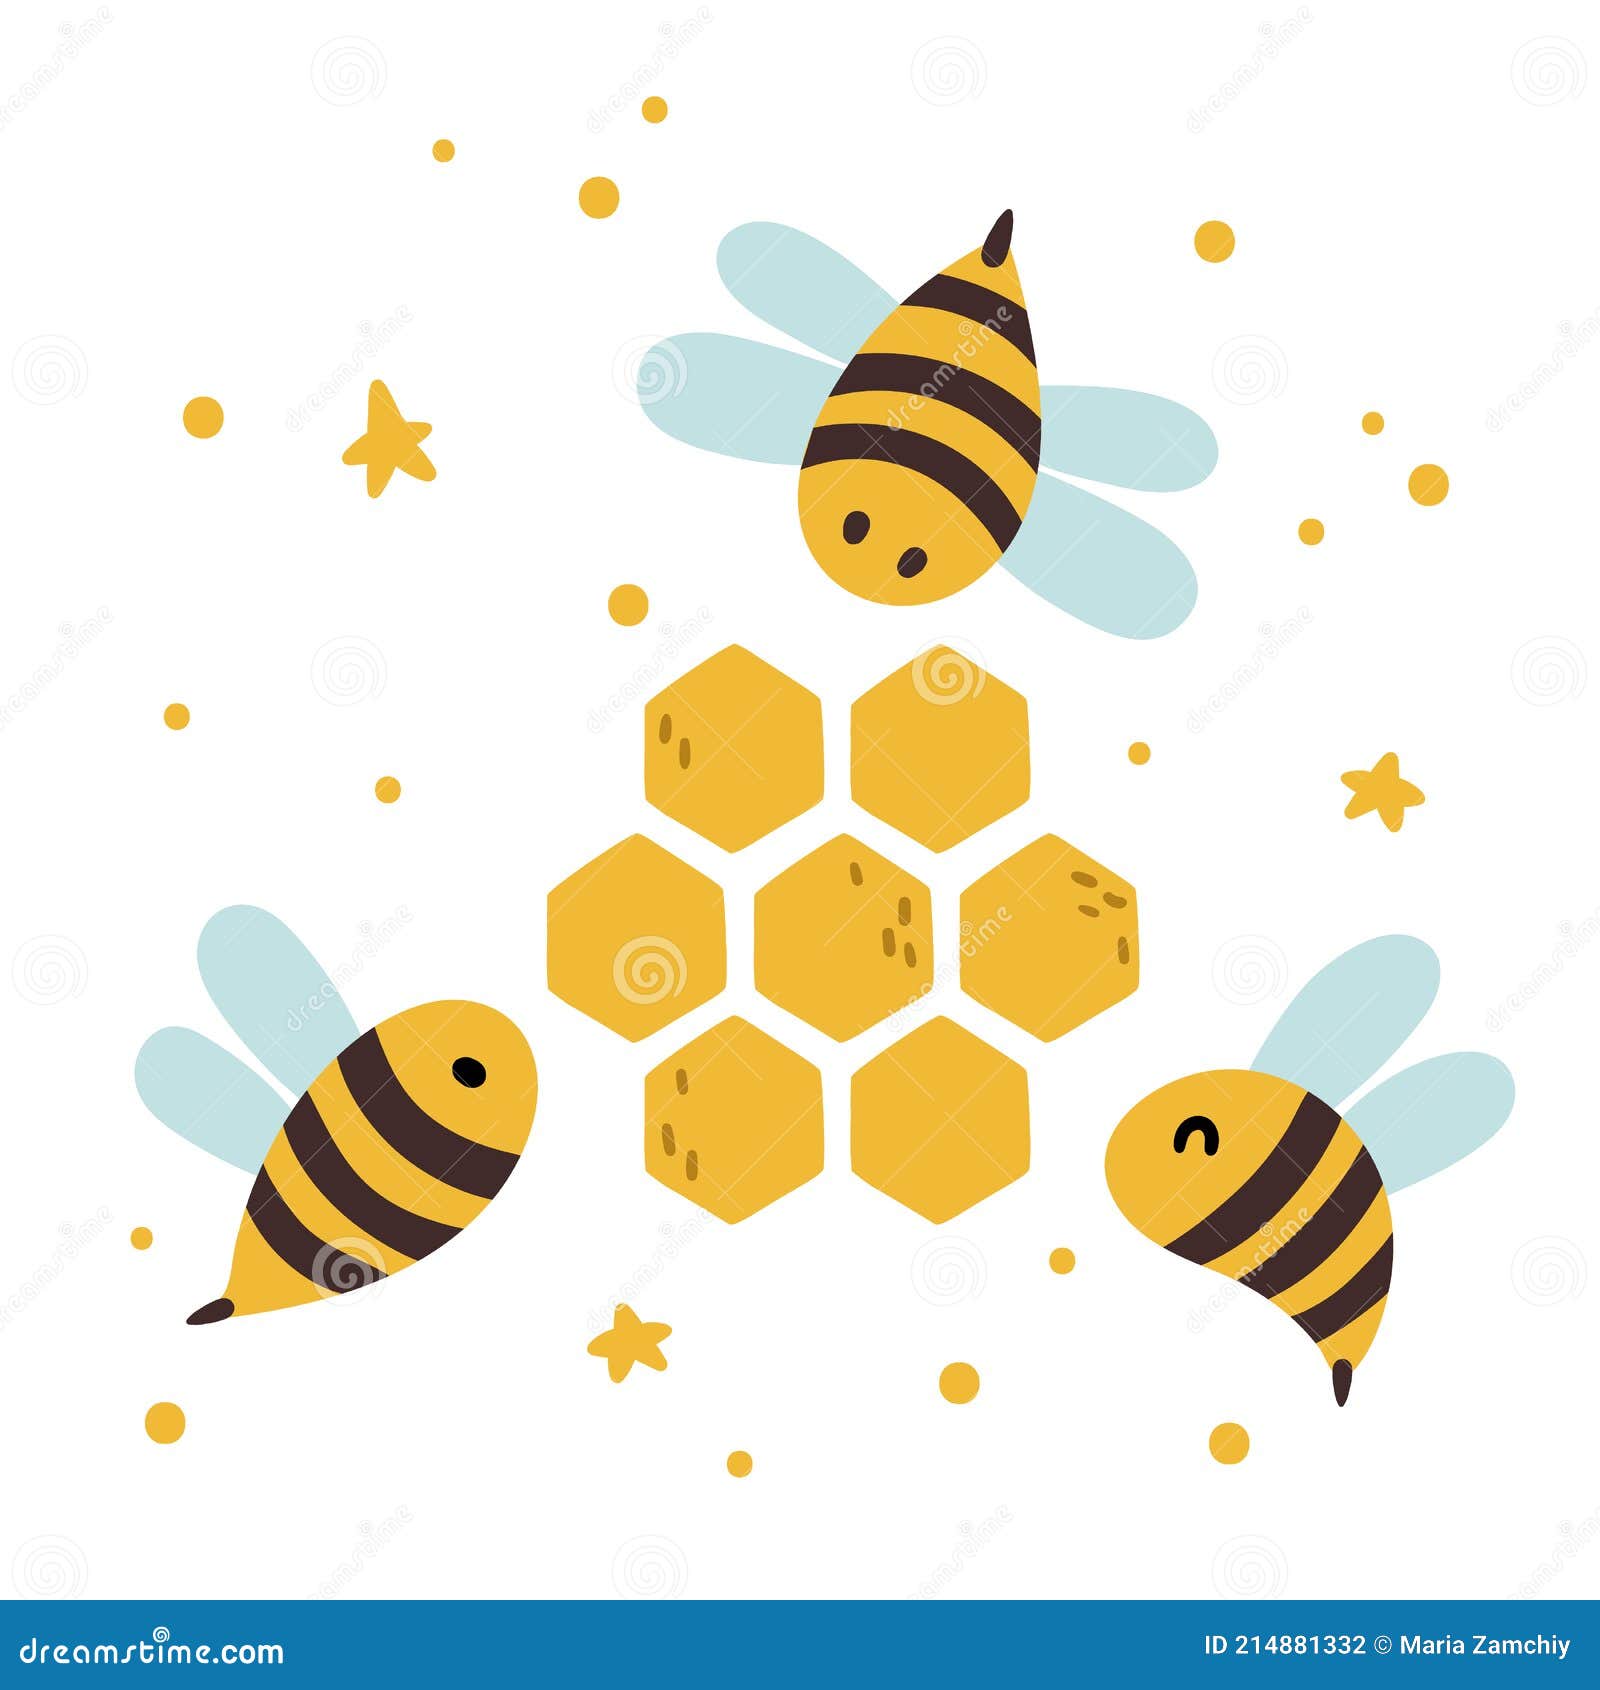 Bee Home Decor, Printable, Bee Decorations, Hexagon Wall Art, Honeybee Wall  Decor, 